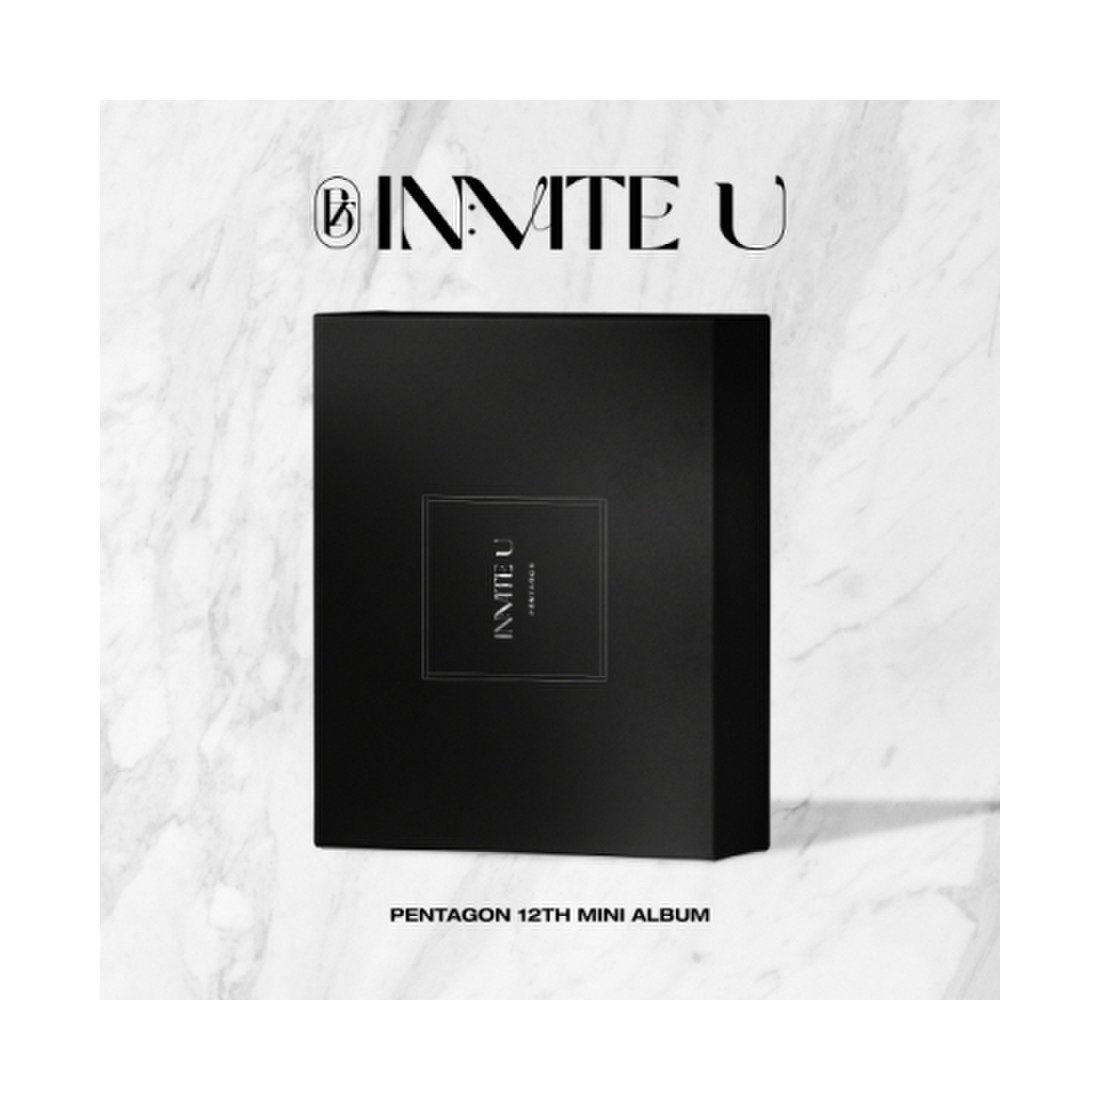 (ONE) Pentagon- In:vite U (12th Mini Album) (Nouveau Ver.)